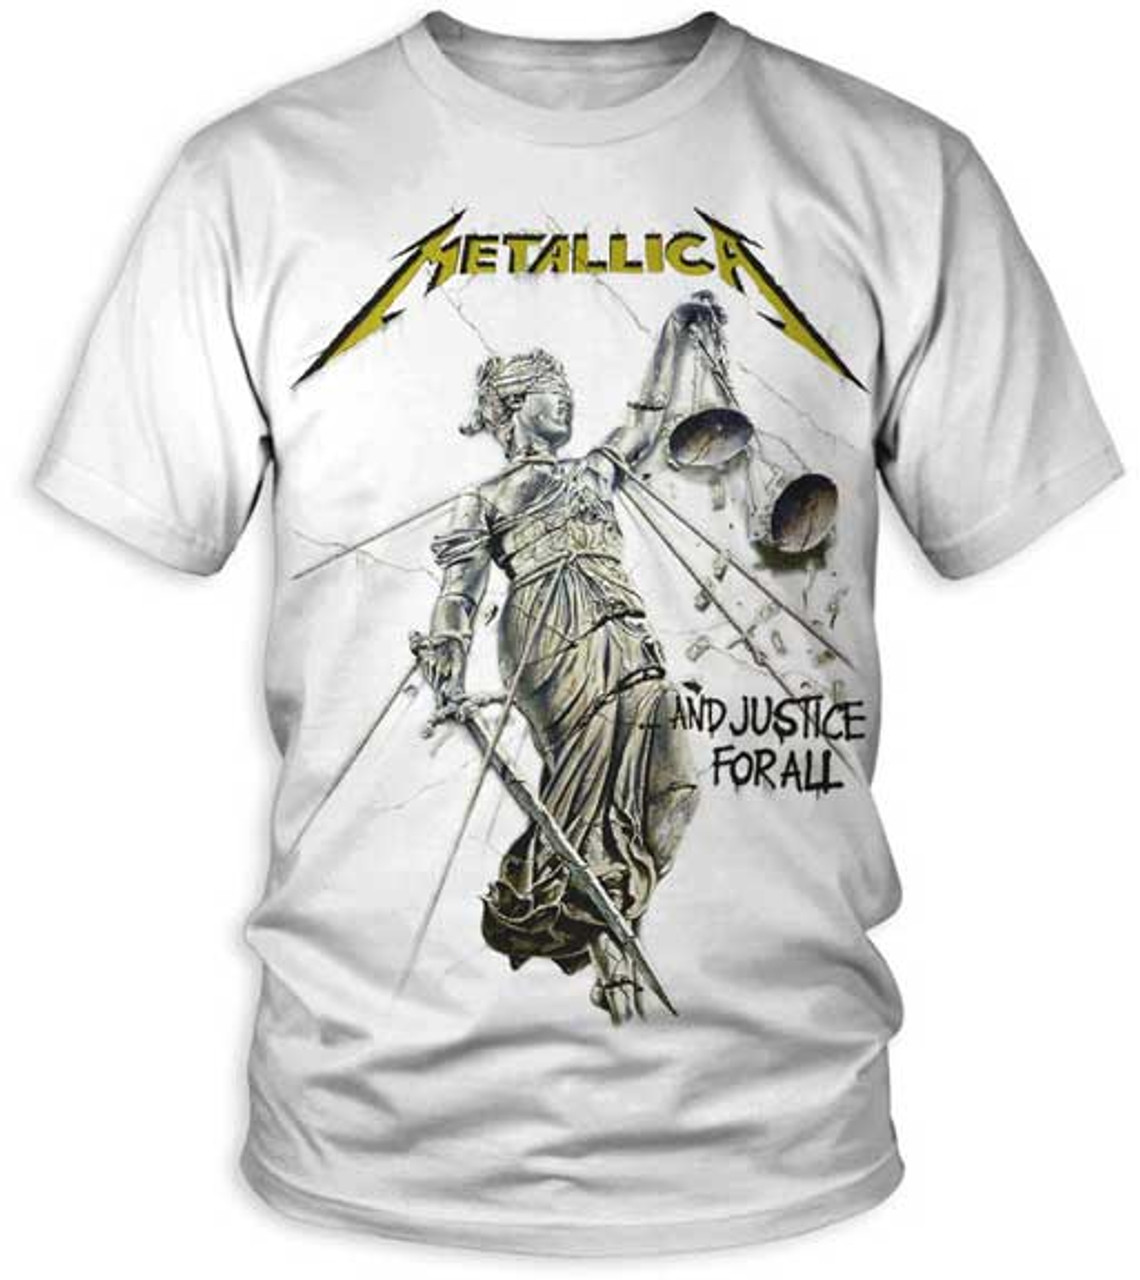 Buy Metallica Ride the Lightning Shirt For Free Shipping CUSTOM XMAS  PRODUCT COMPANY